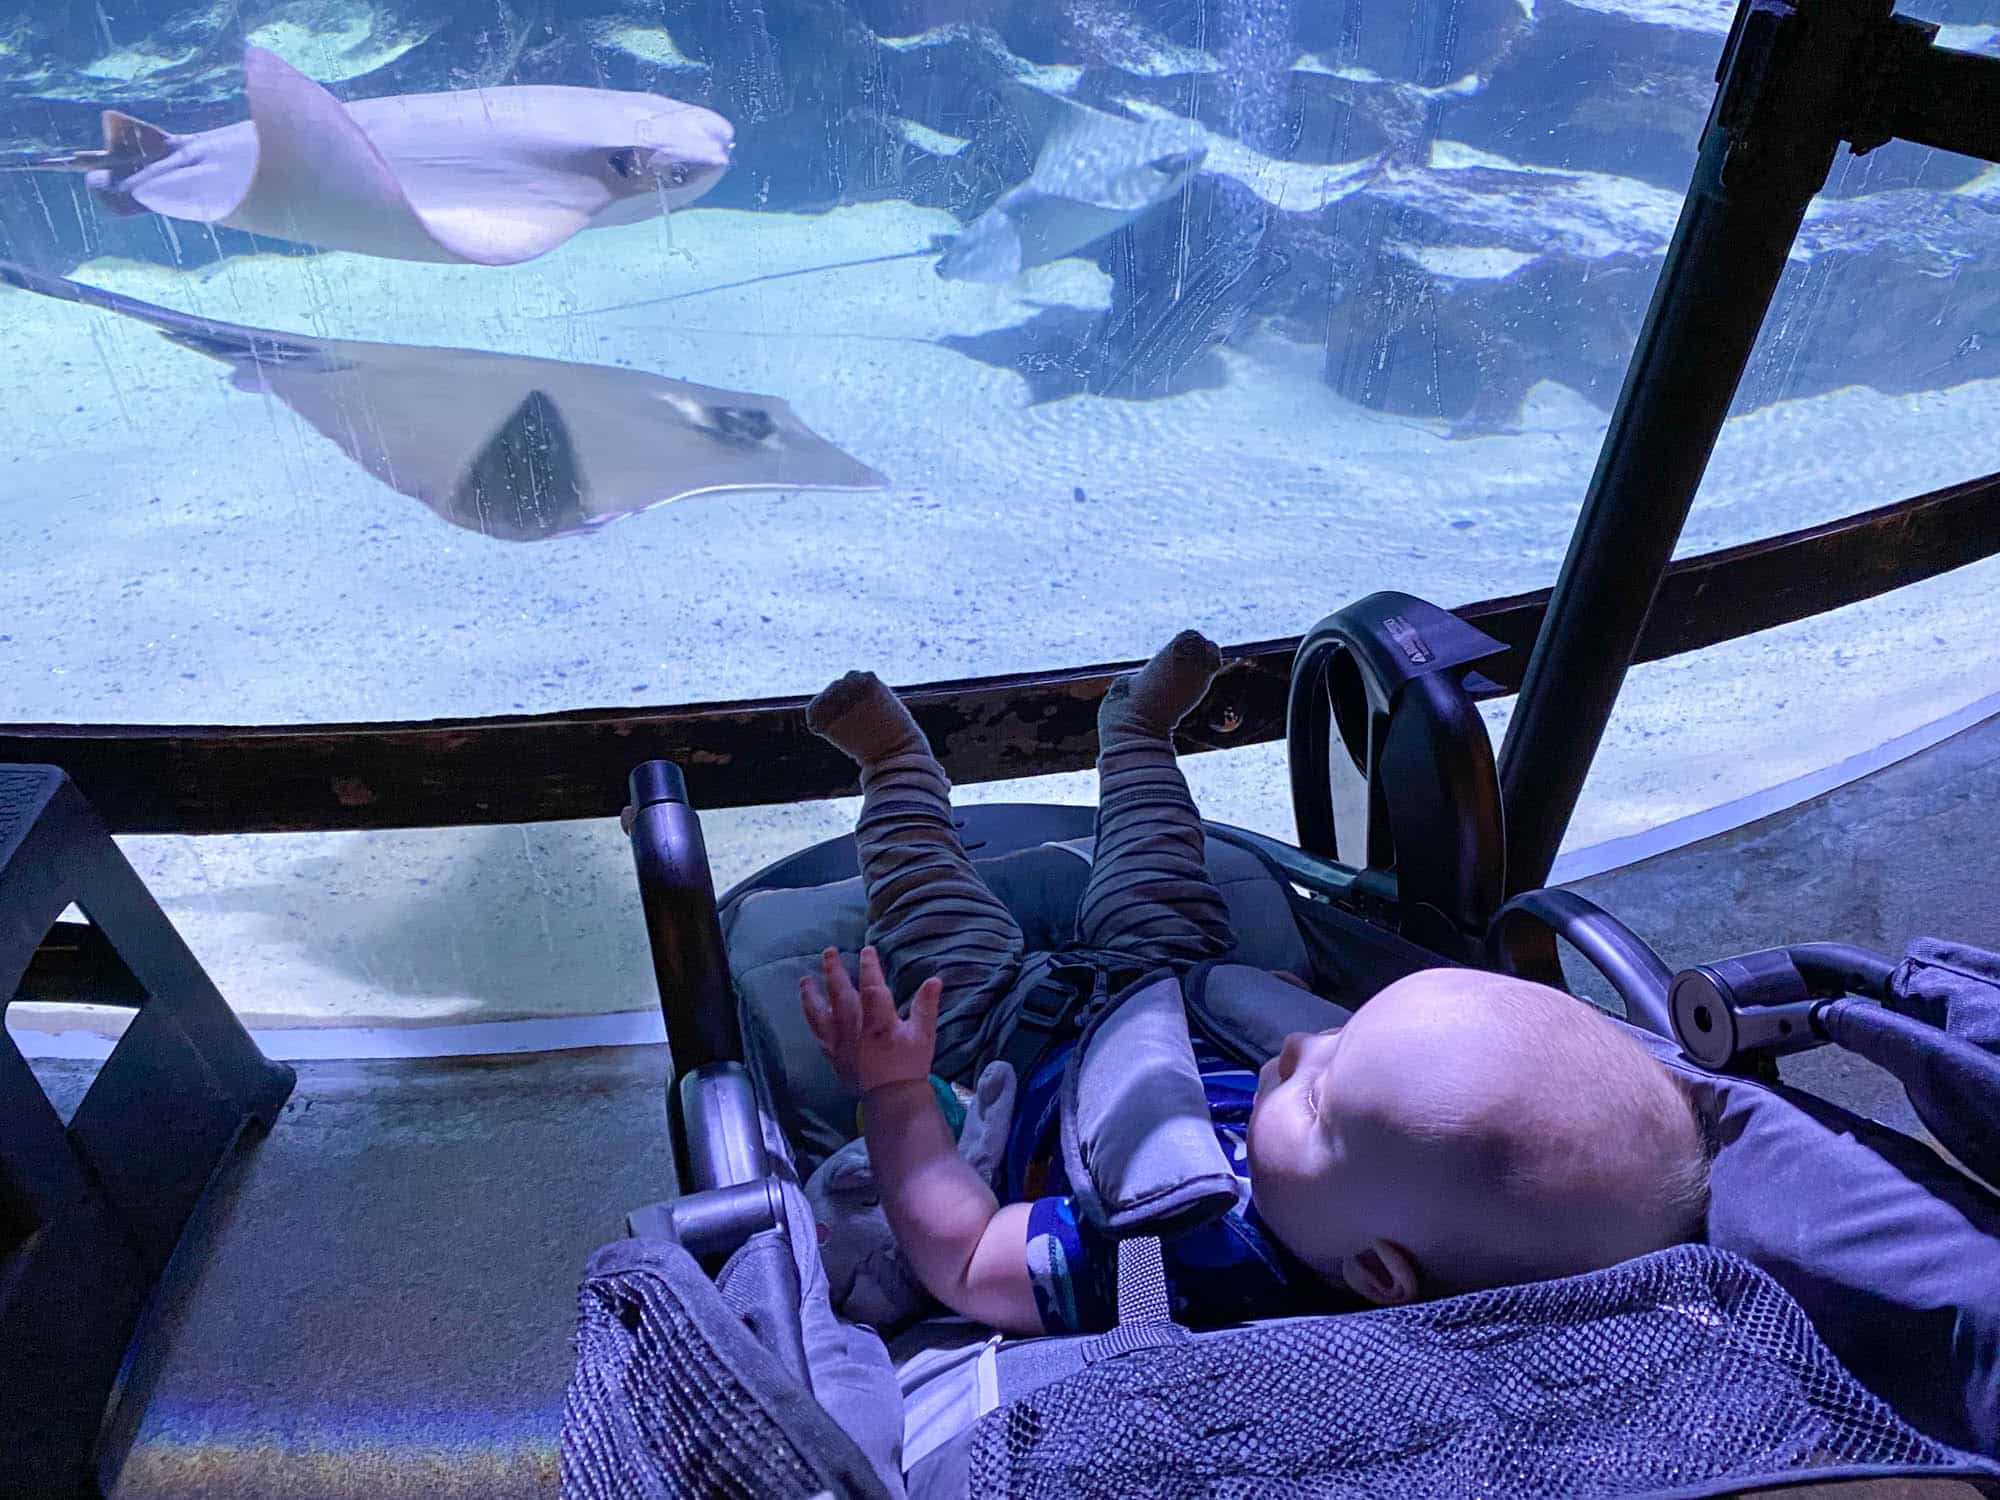 Baby watching stingrays at Greater Cleveland Aquarium